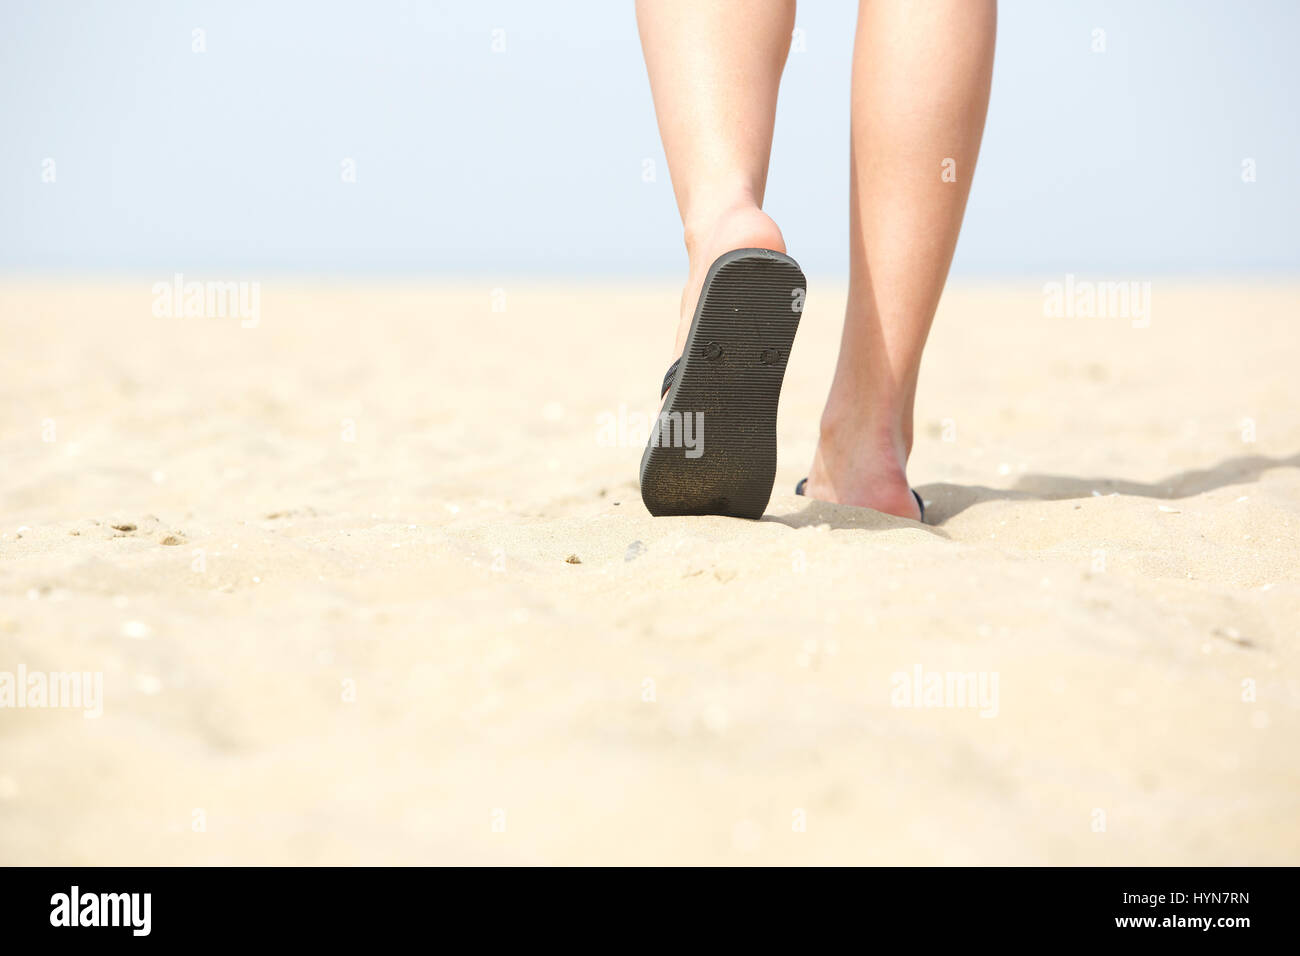 Caminando en sandalias fotografías e imágenes de alta resolución - Alamy